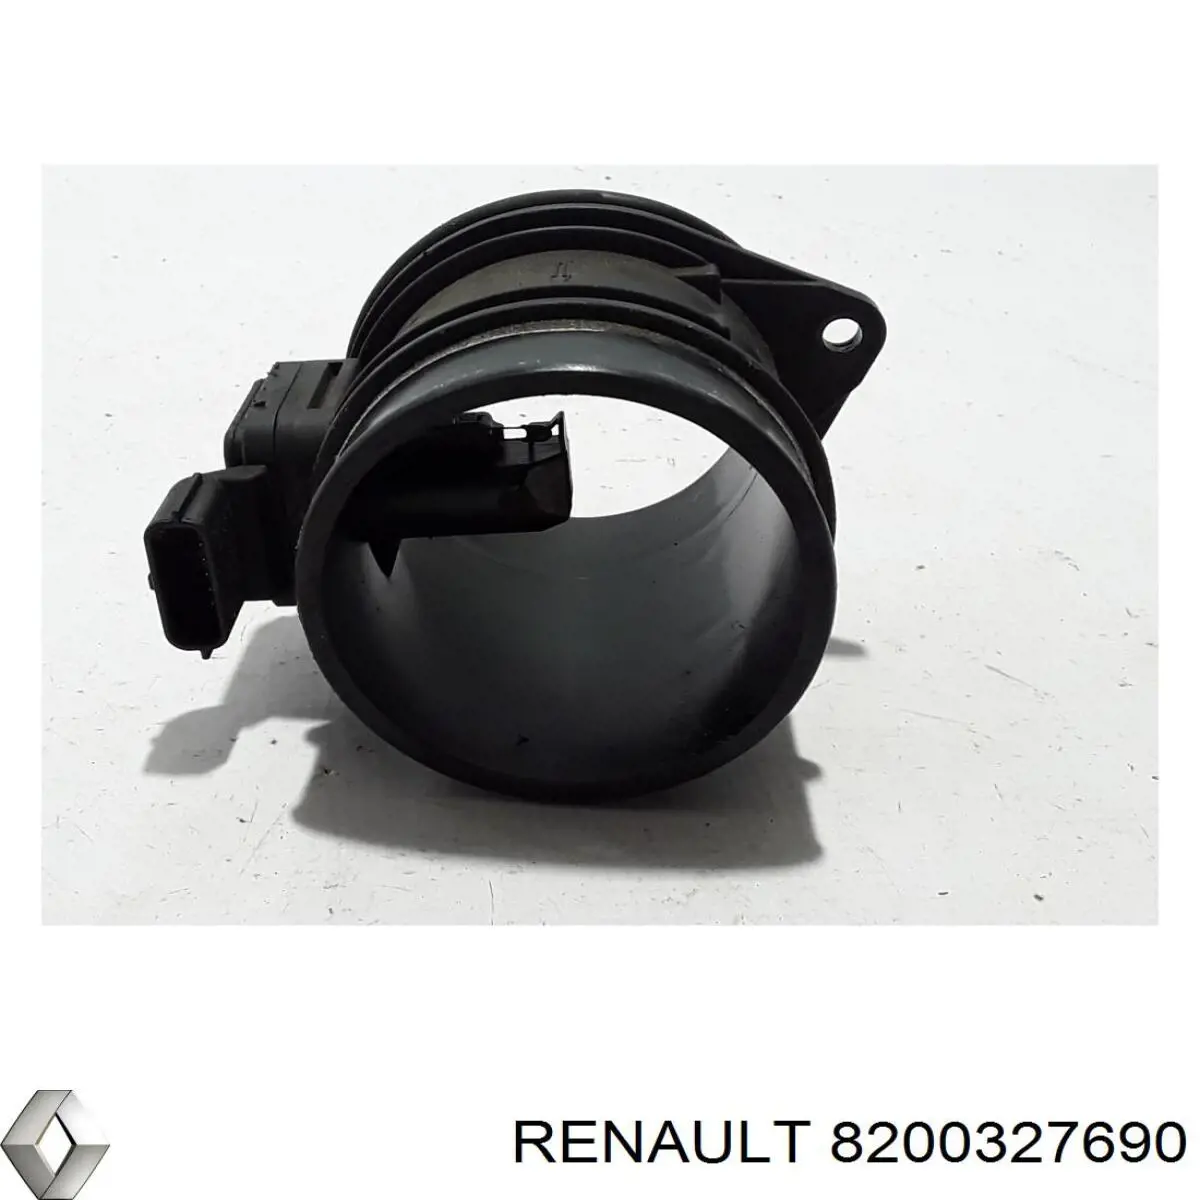 8200327690 Renault (RVI) sensor de fluxo (consumo de ar, medidor de consumo M.A.F. - (Mass Airflow))